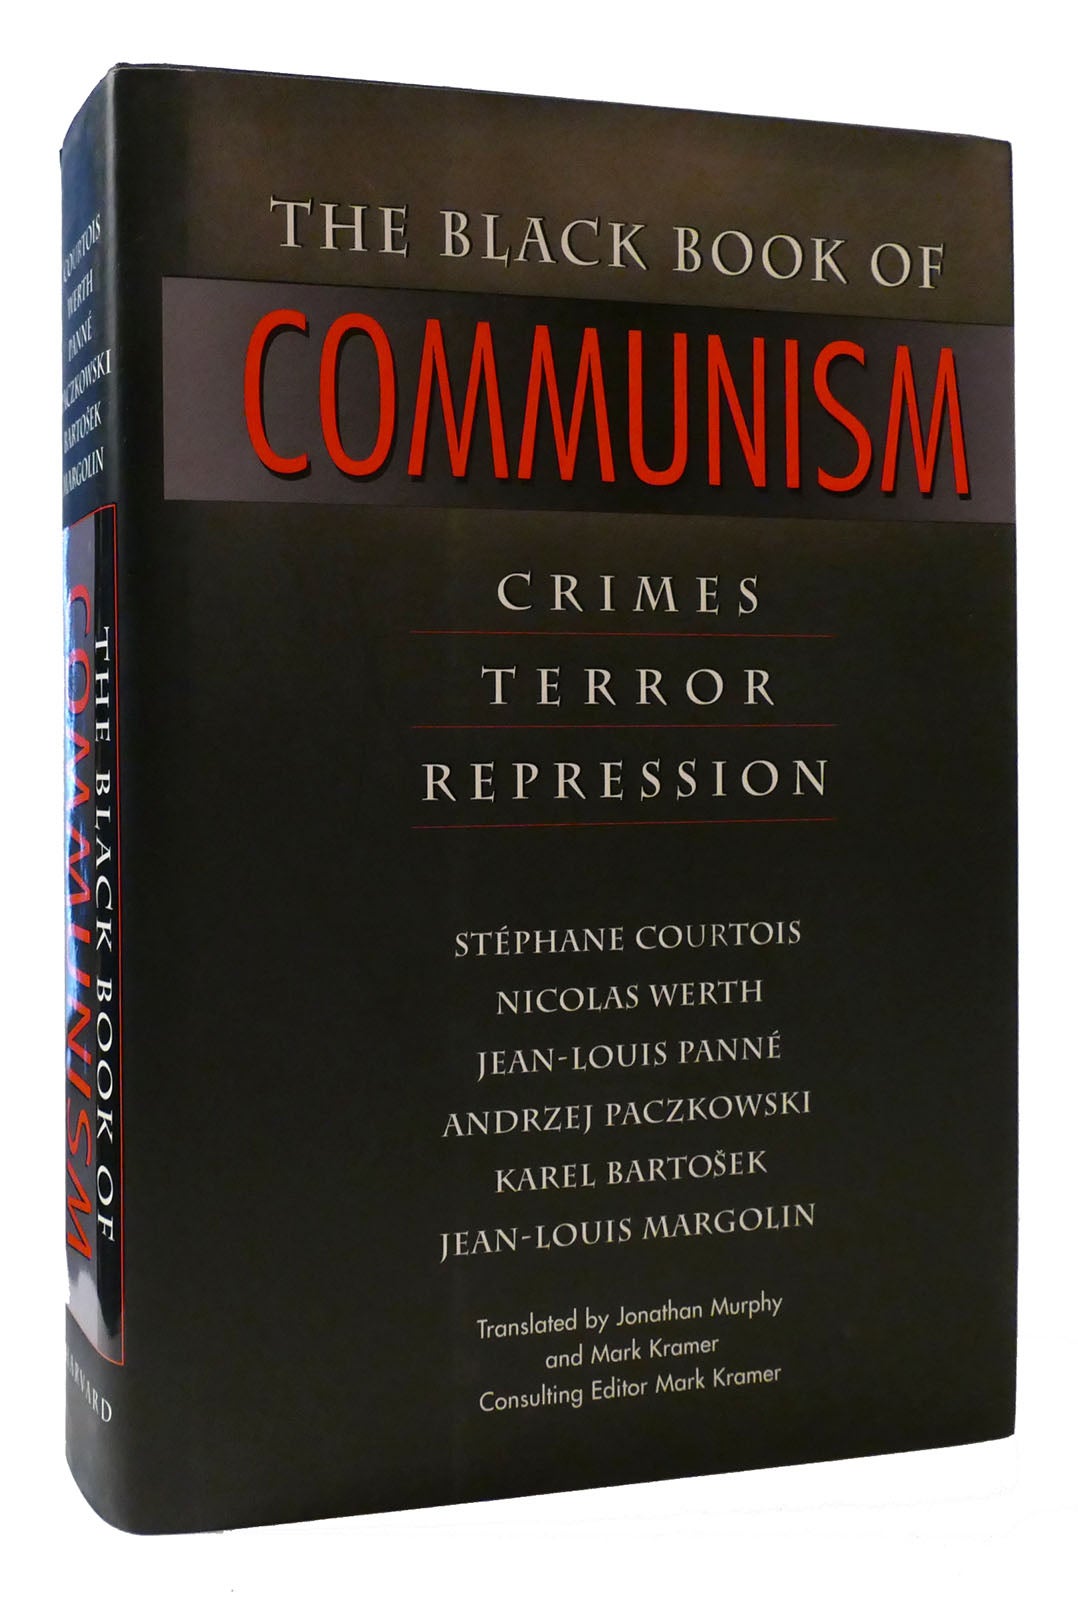 The Black Book of Communism - Wikipedia